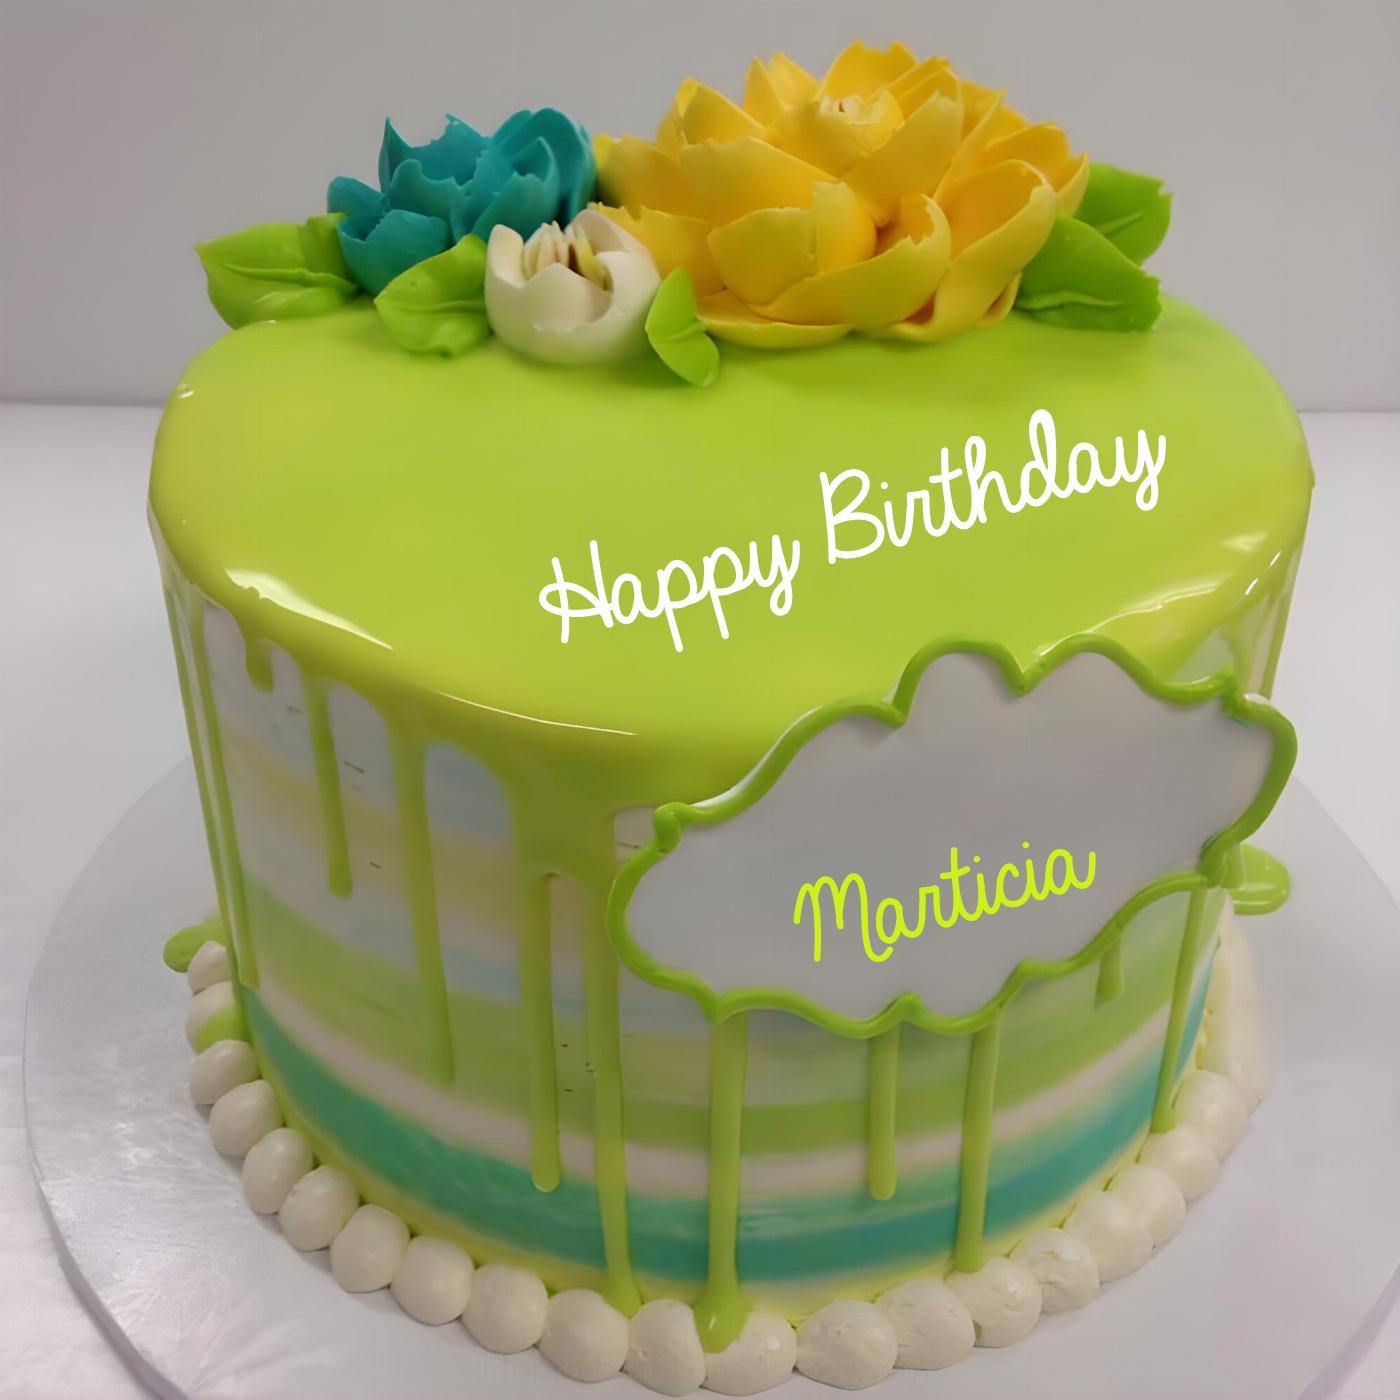 Happy Birthday Marticia Green Flowers Cake